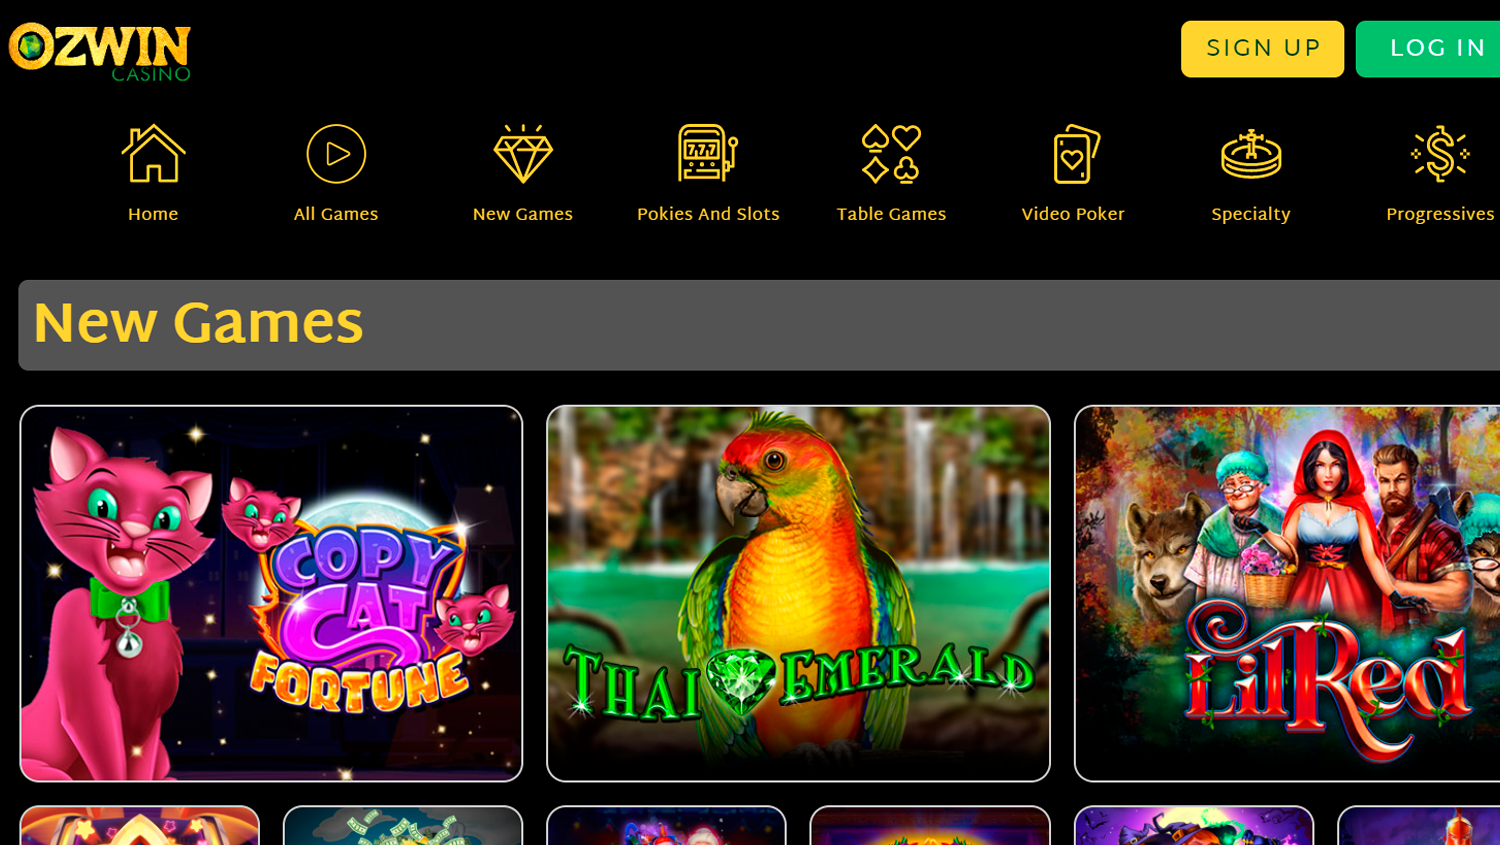 Oziwn Casino games page